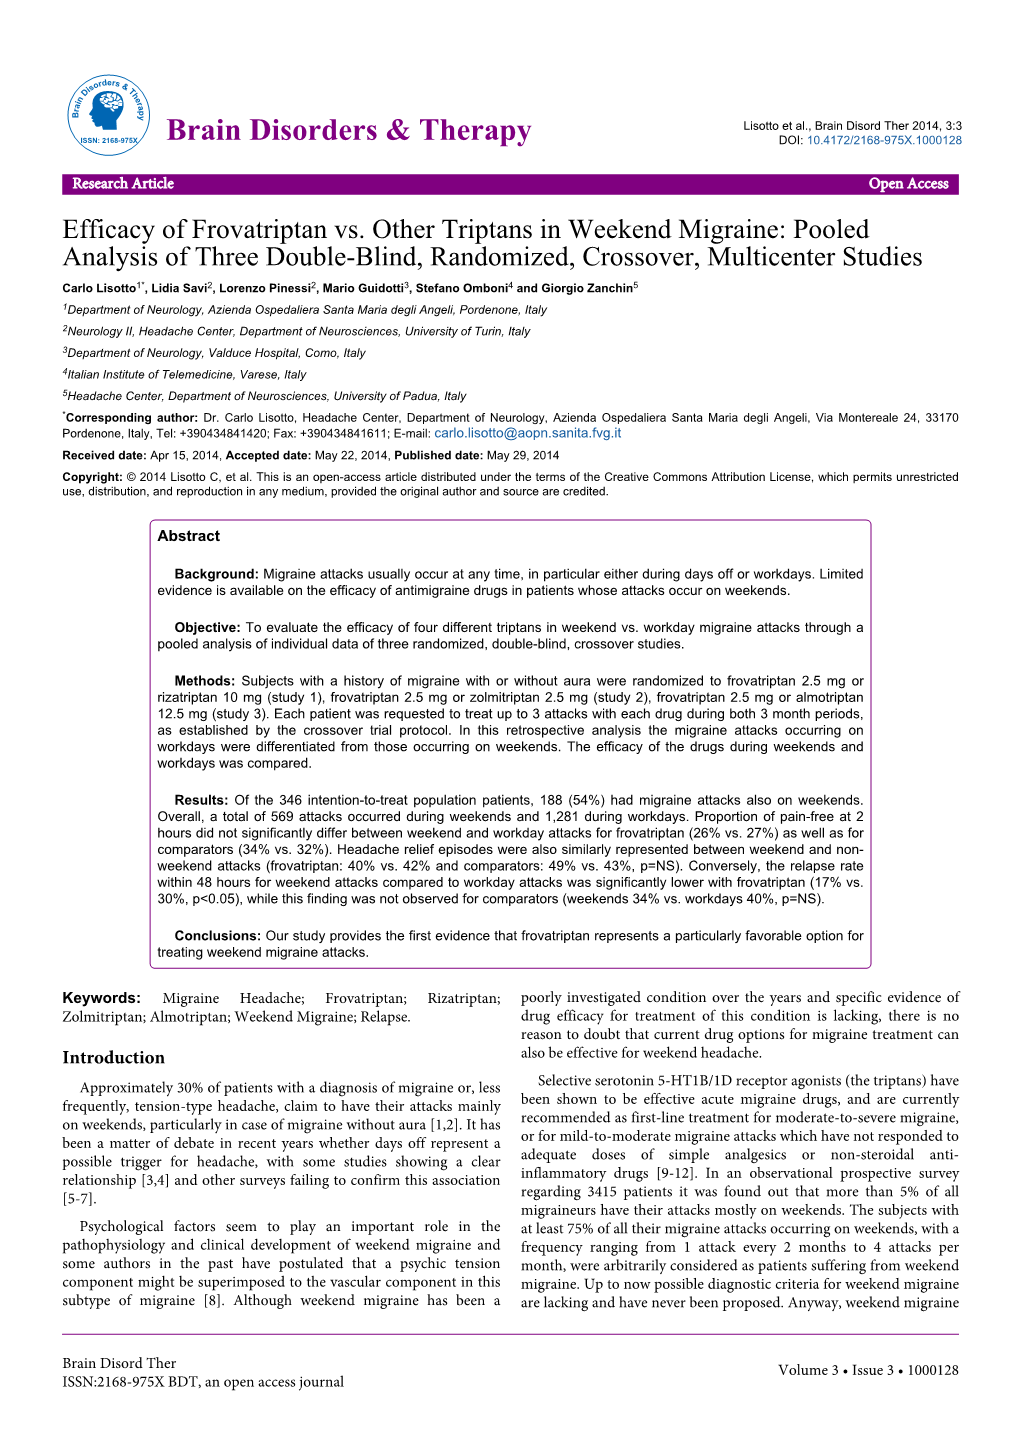 Efficacy of Frovatriptan Vs. Other Triptans